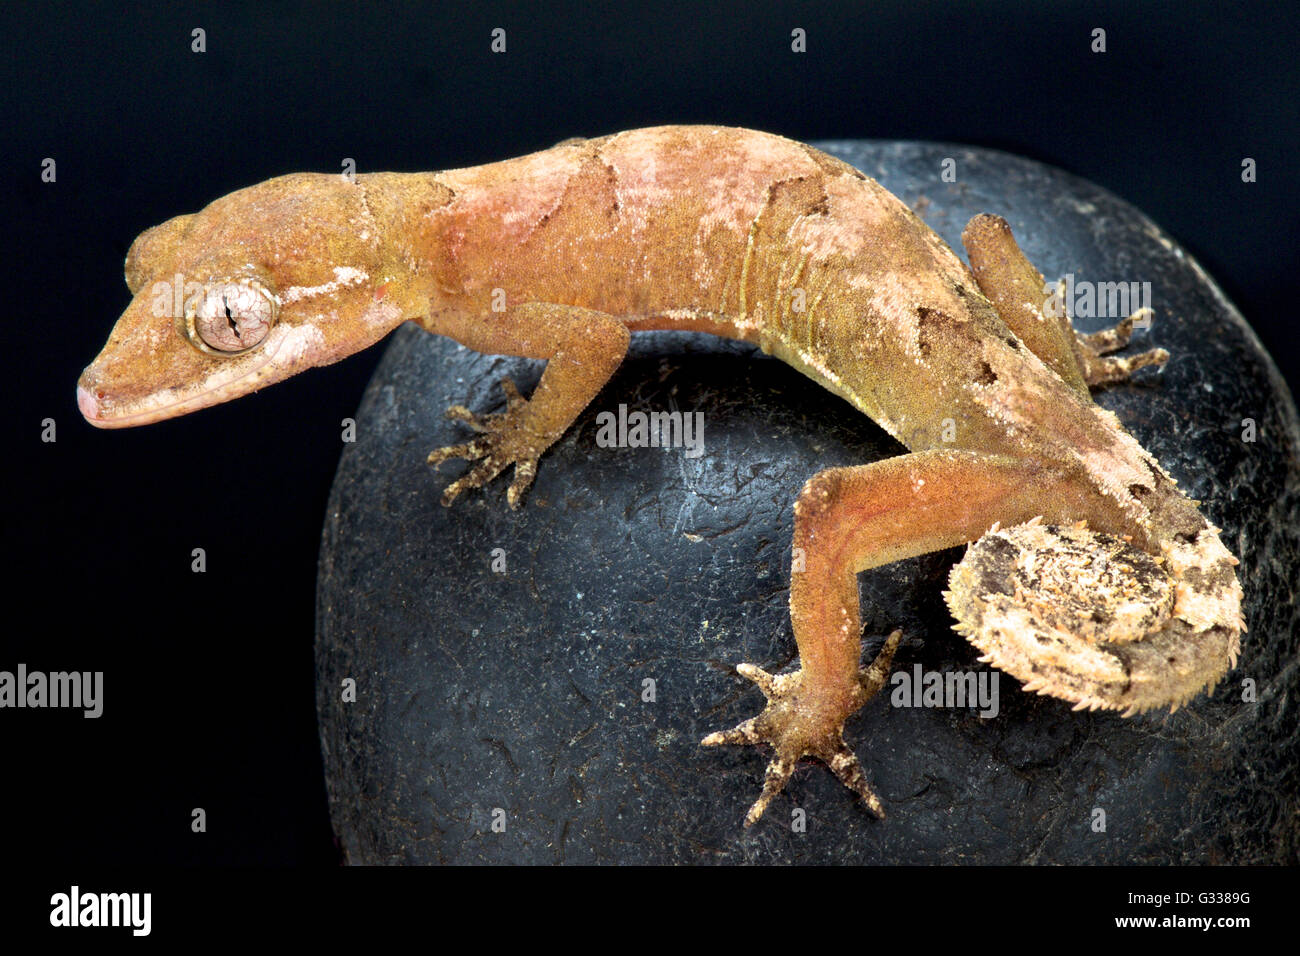 Malasia Elok Bowfingered Gecko (Cyrtodactylus) Foto de stock